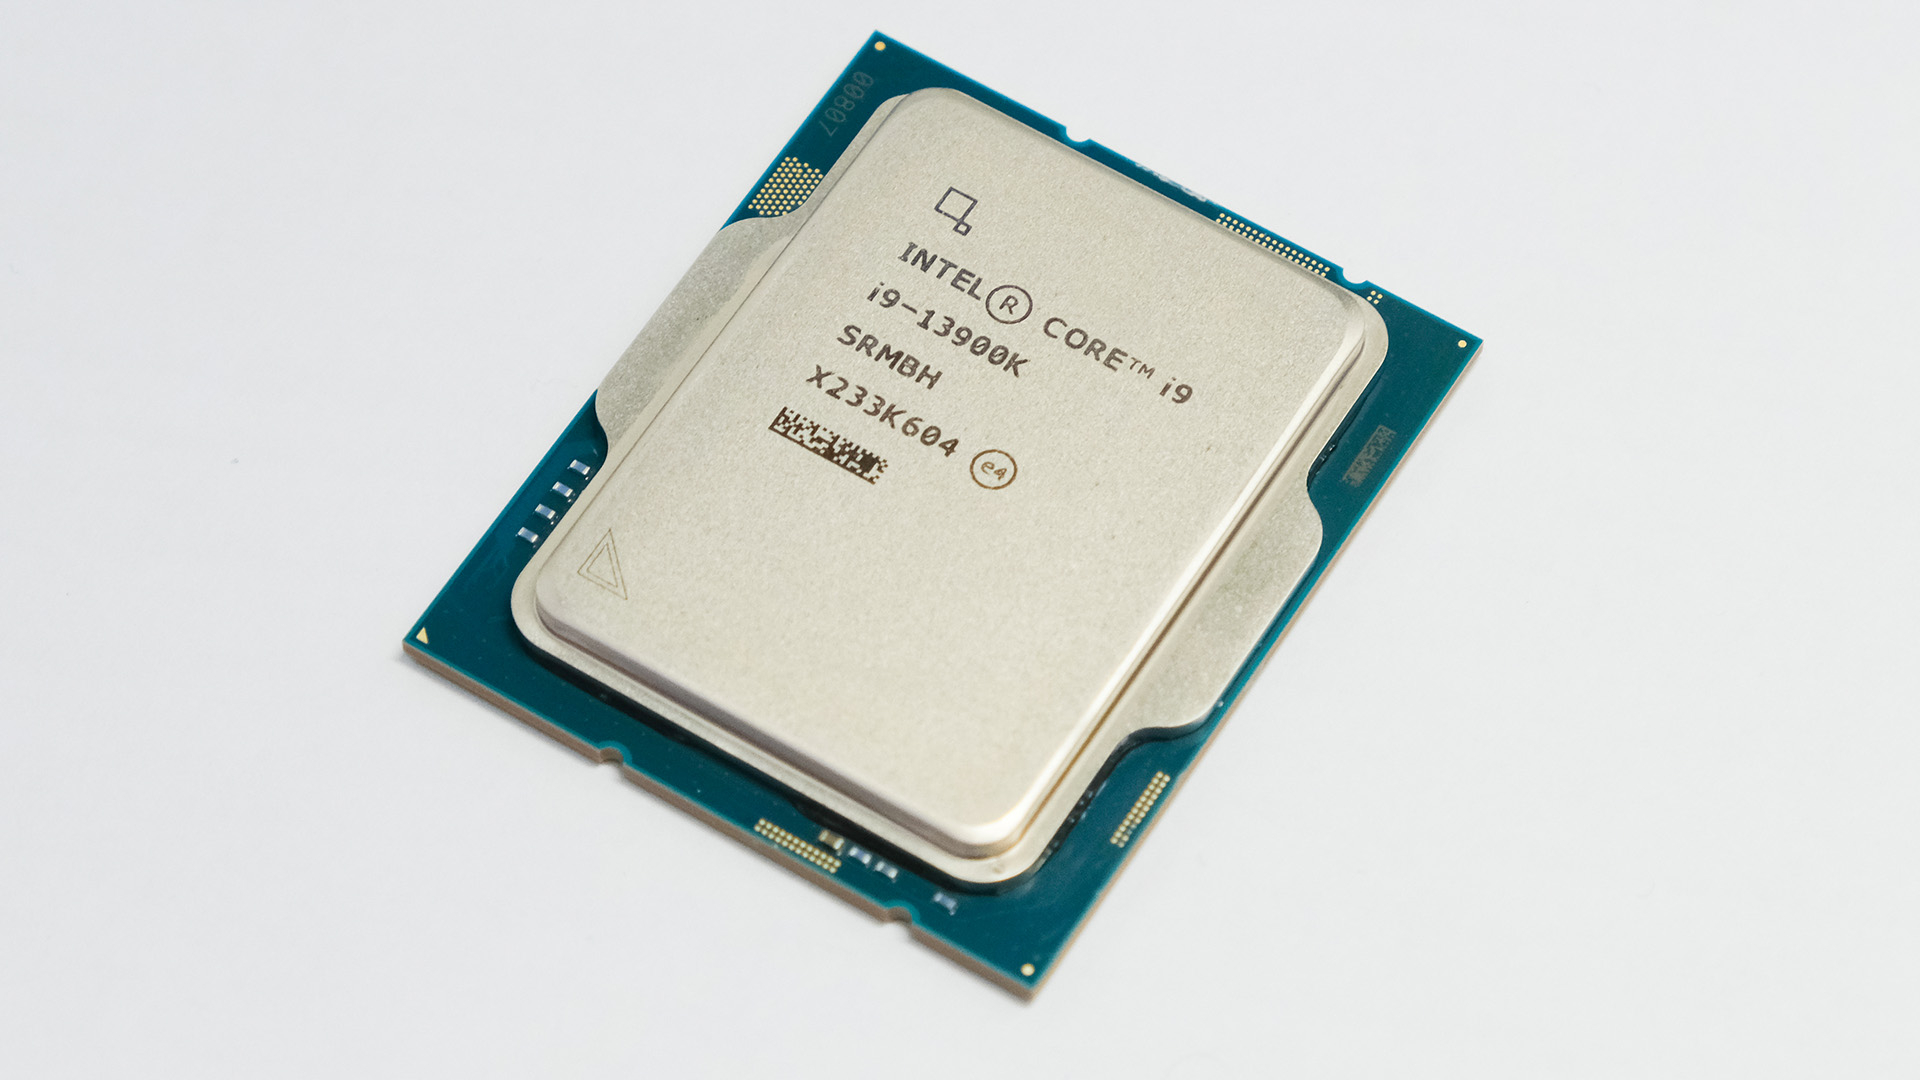 Intel Core i9-13900K - Core i9 13th Gen Raptor Lake 24-Core (8P+